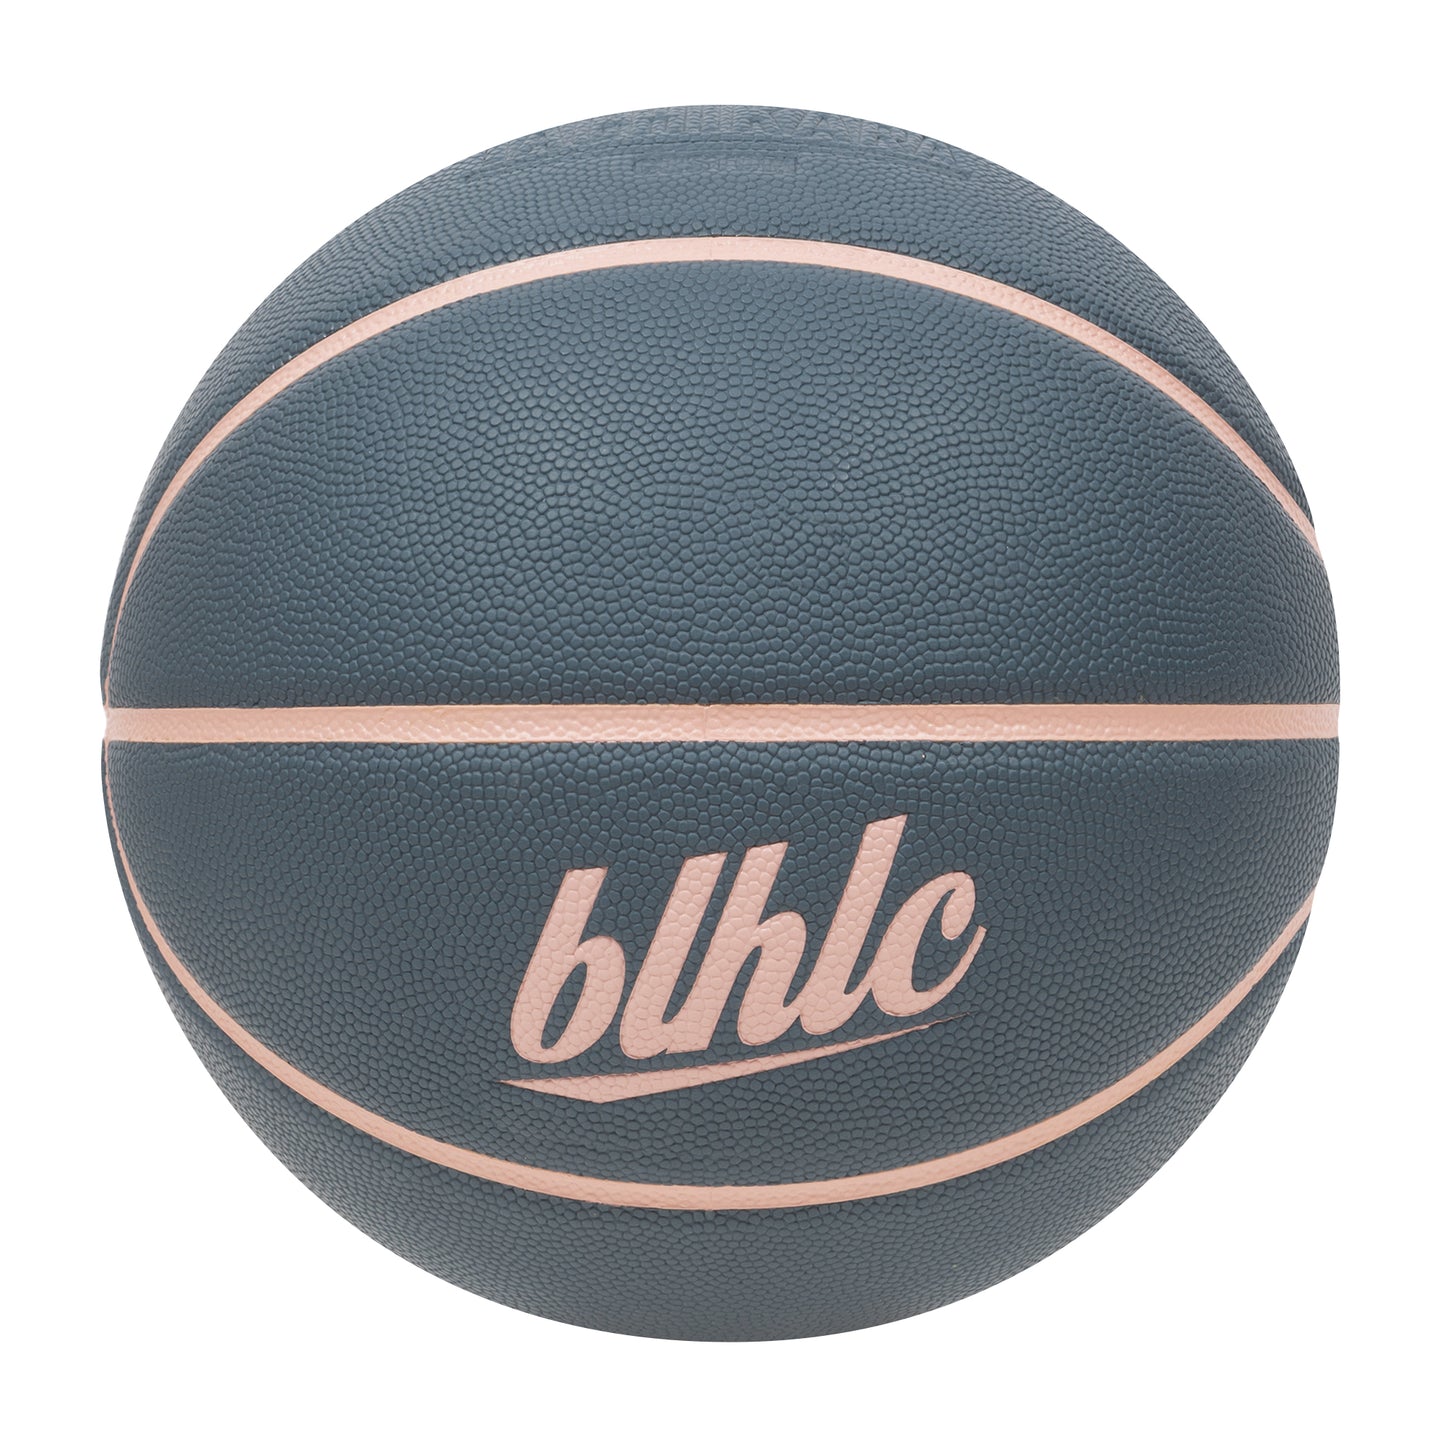 Playground Basketball / ballaholic x TACHIKARA(slate blue/pink)